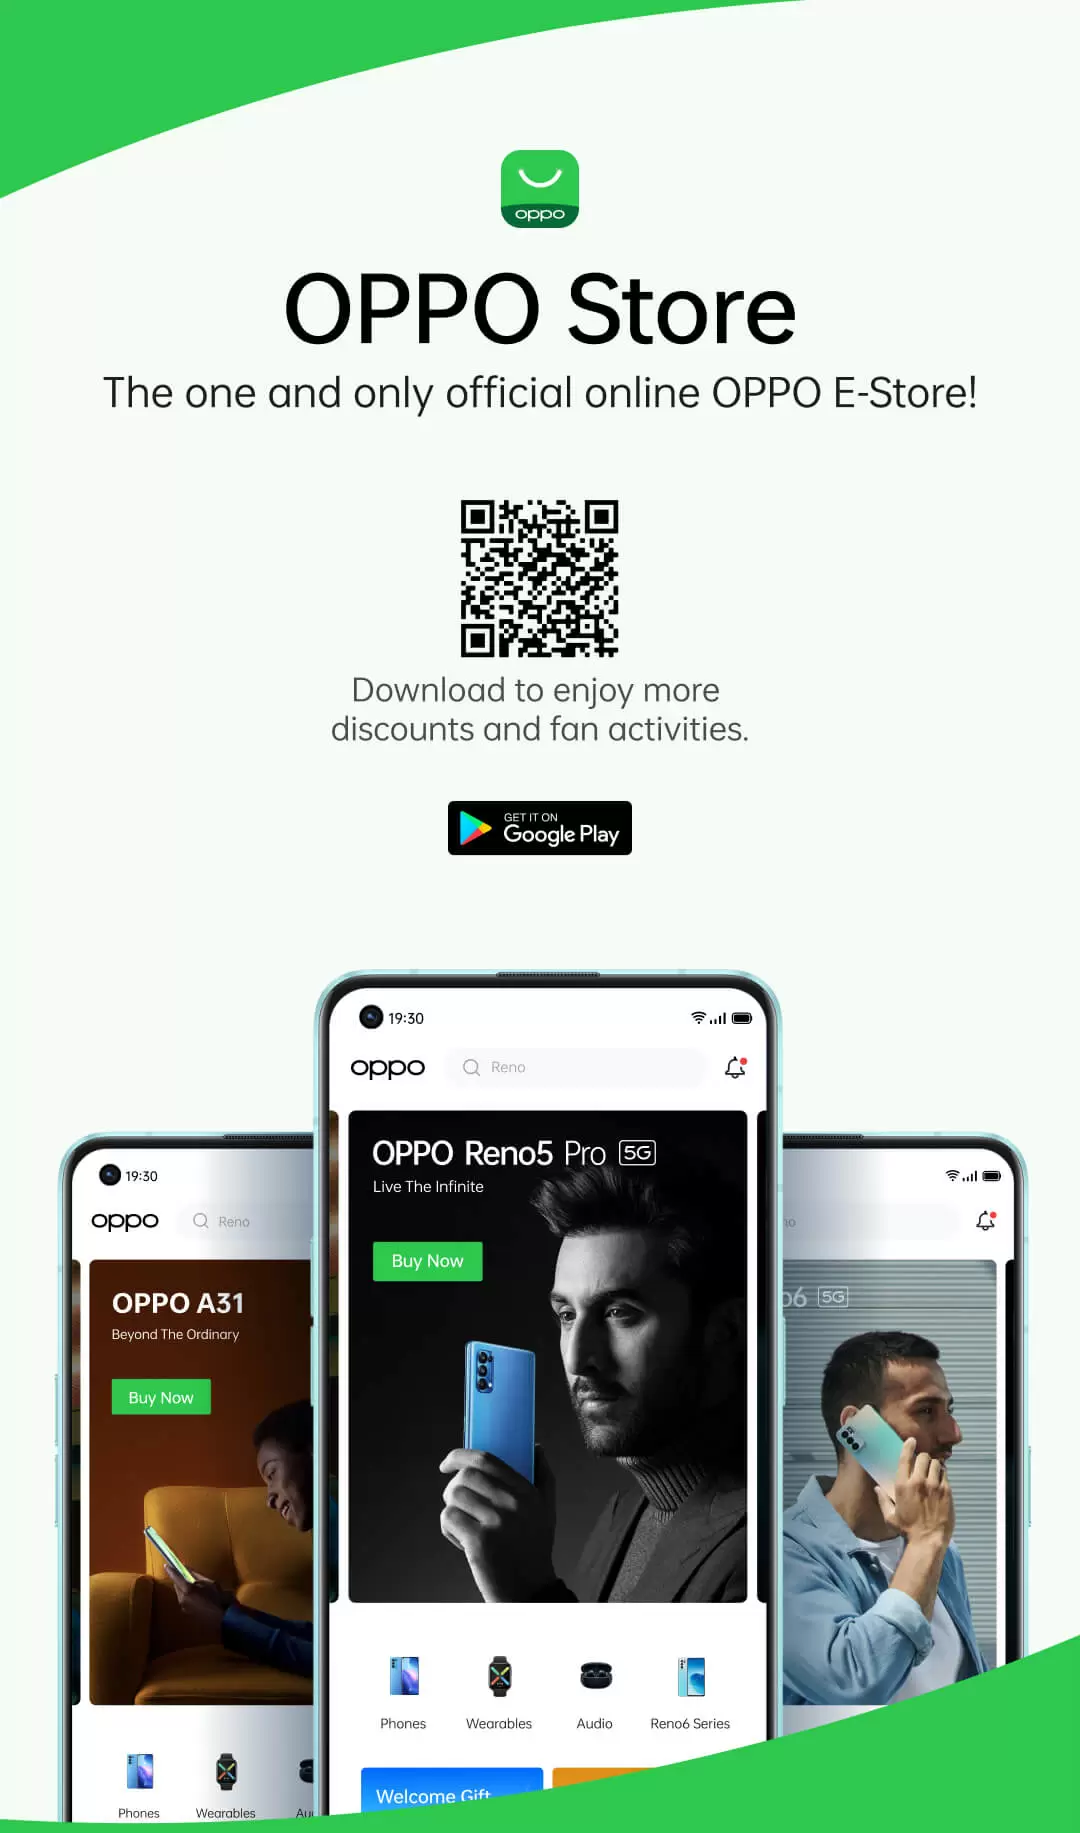 Buy OPPO OPPO Type C Data Cable - OPPO India - OPPO Store (India)